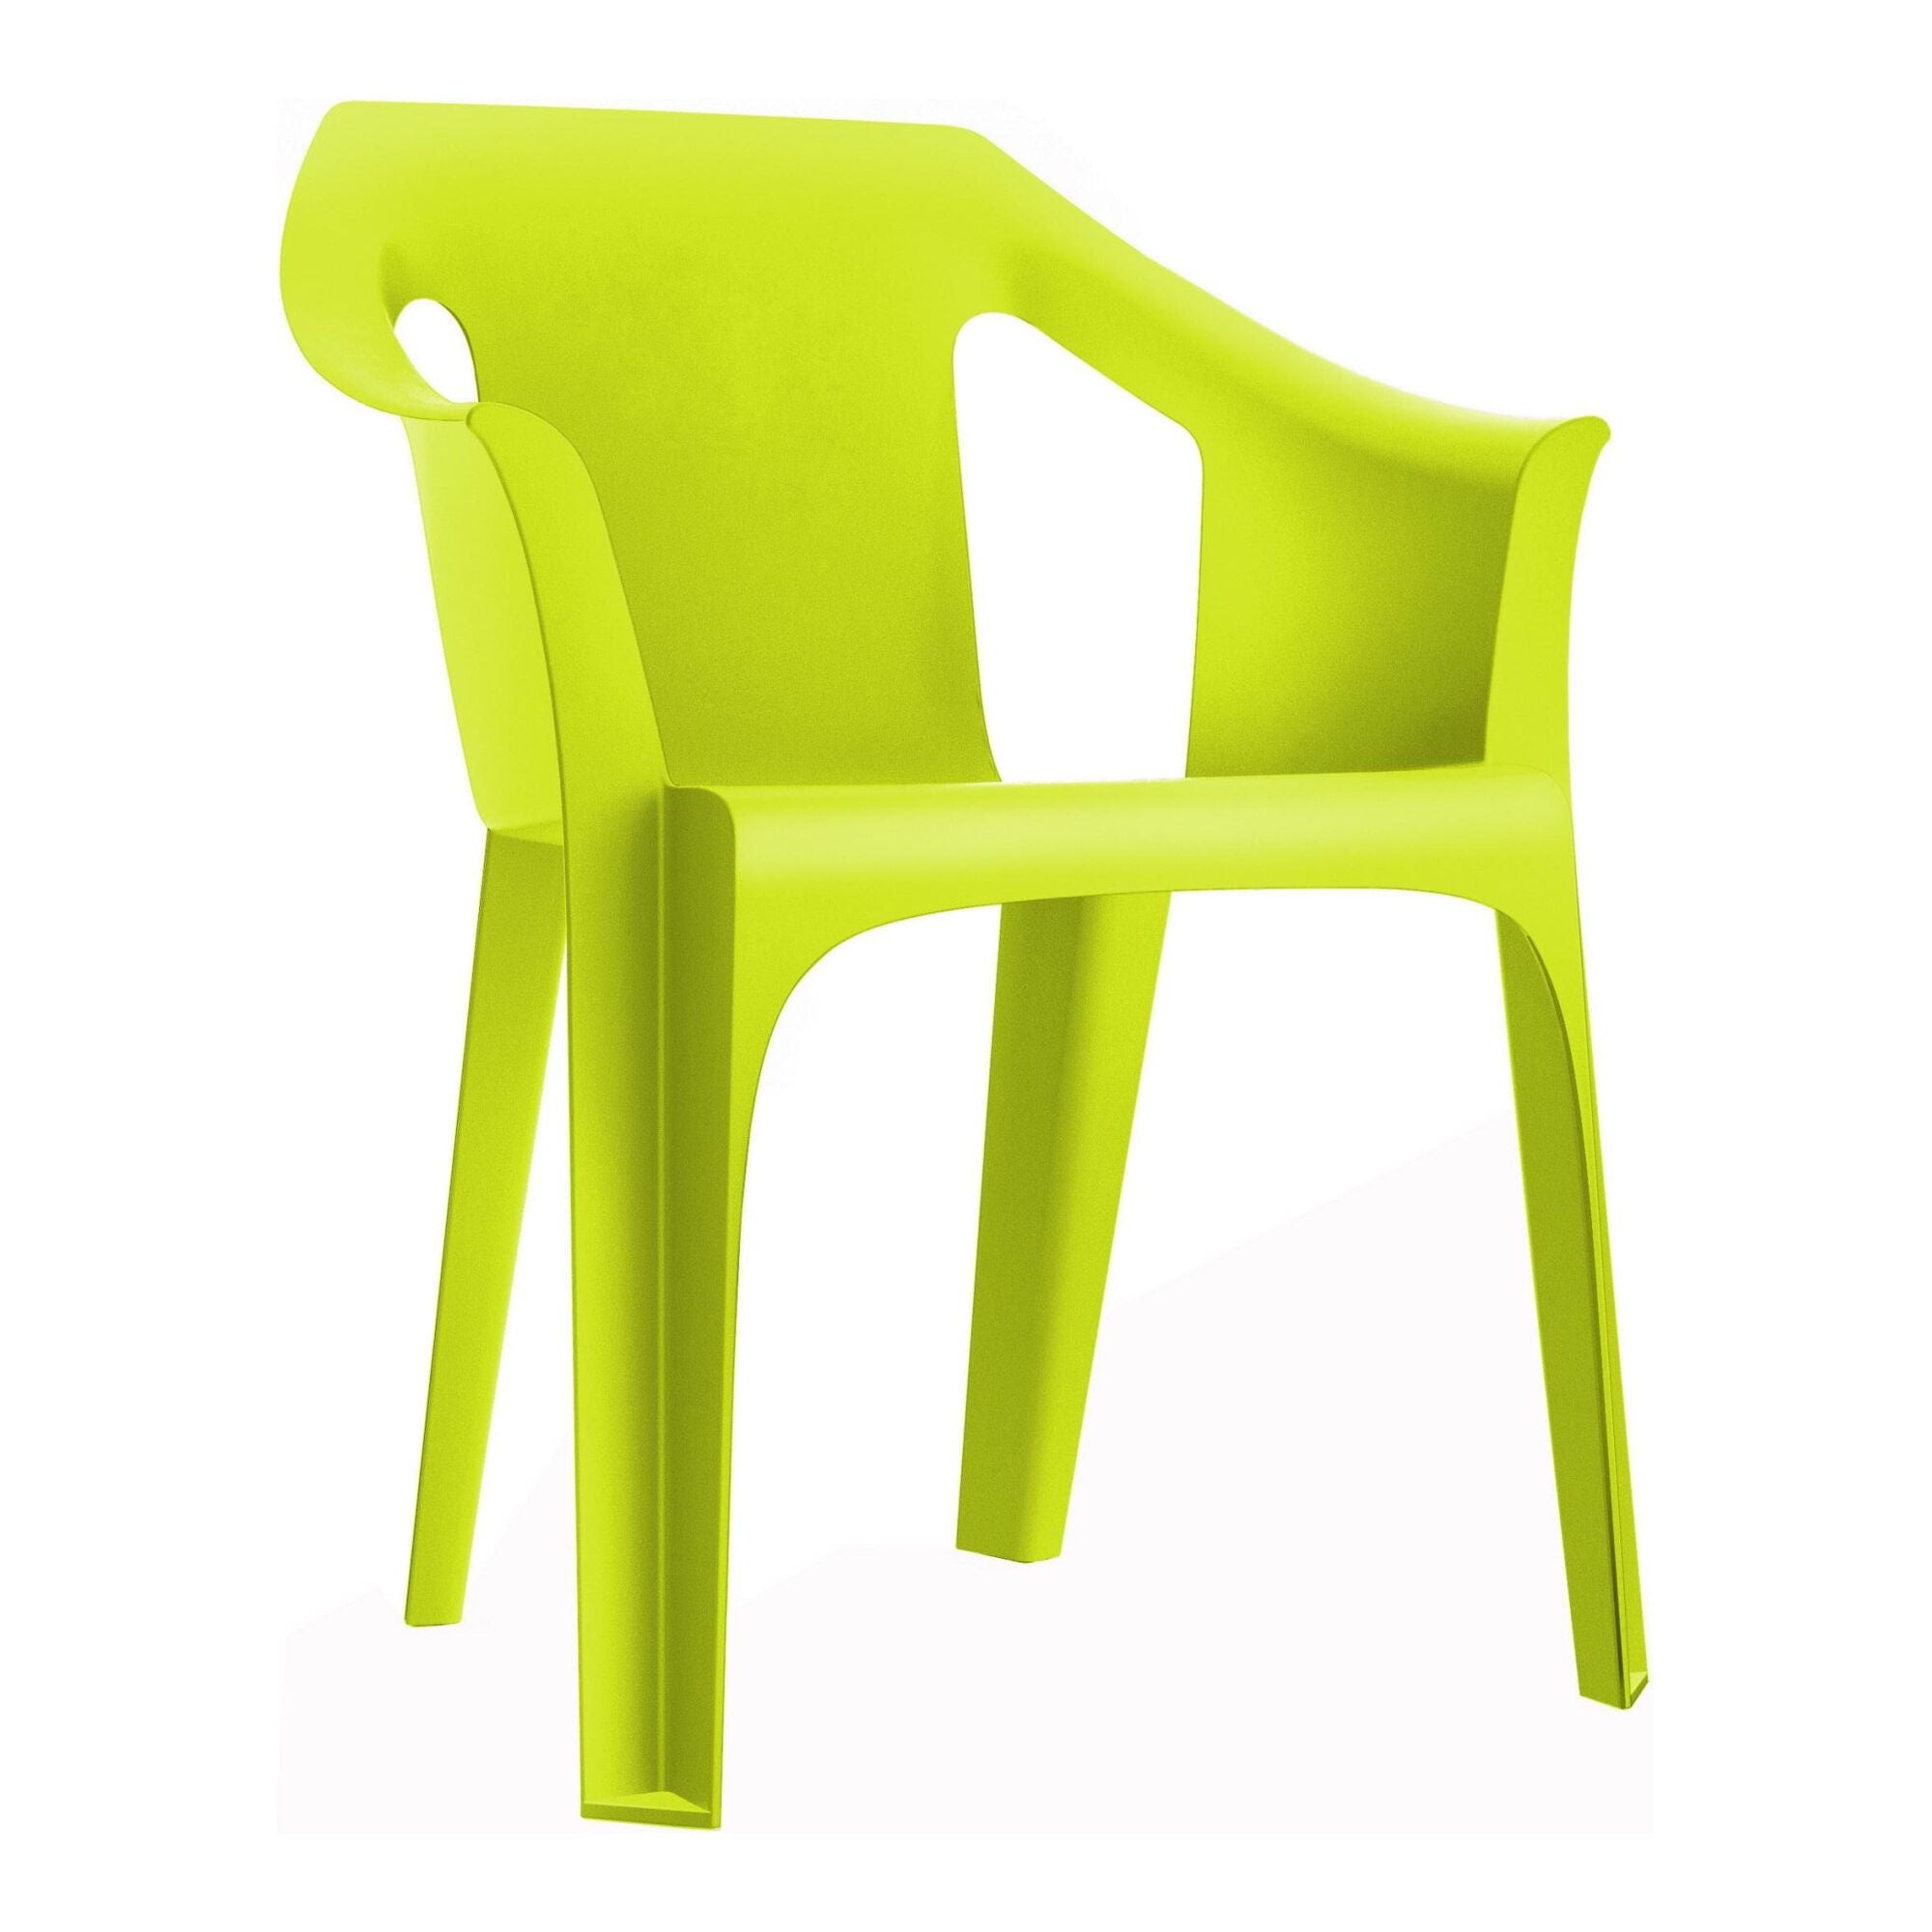 Garbar cool armchair outdoor green lime